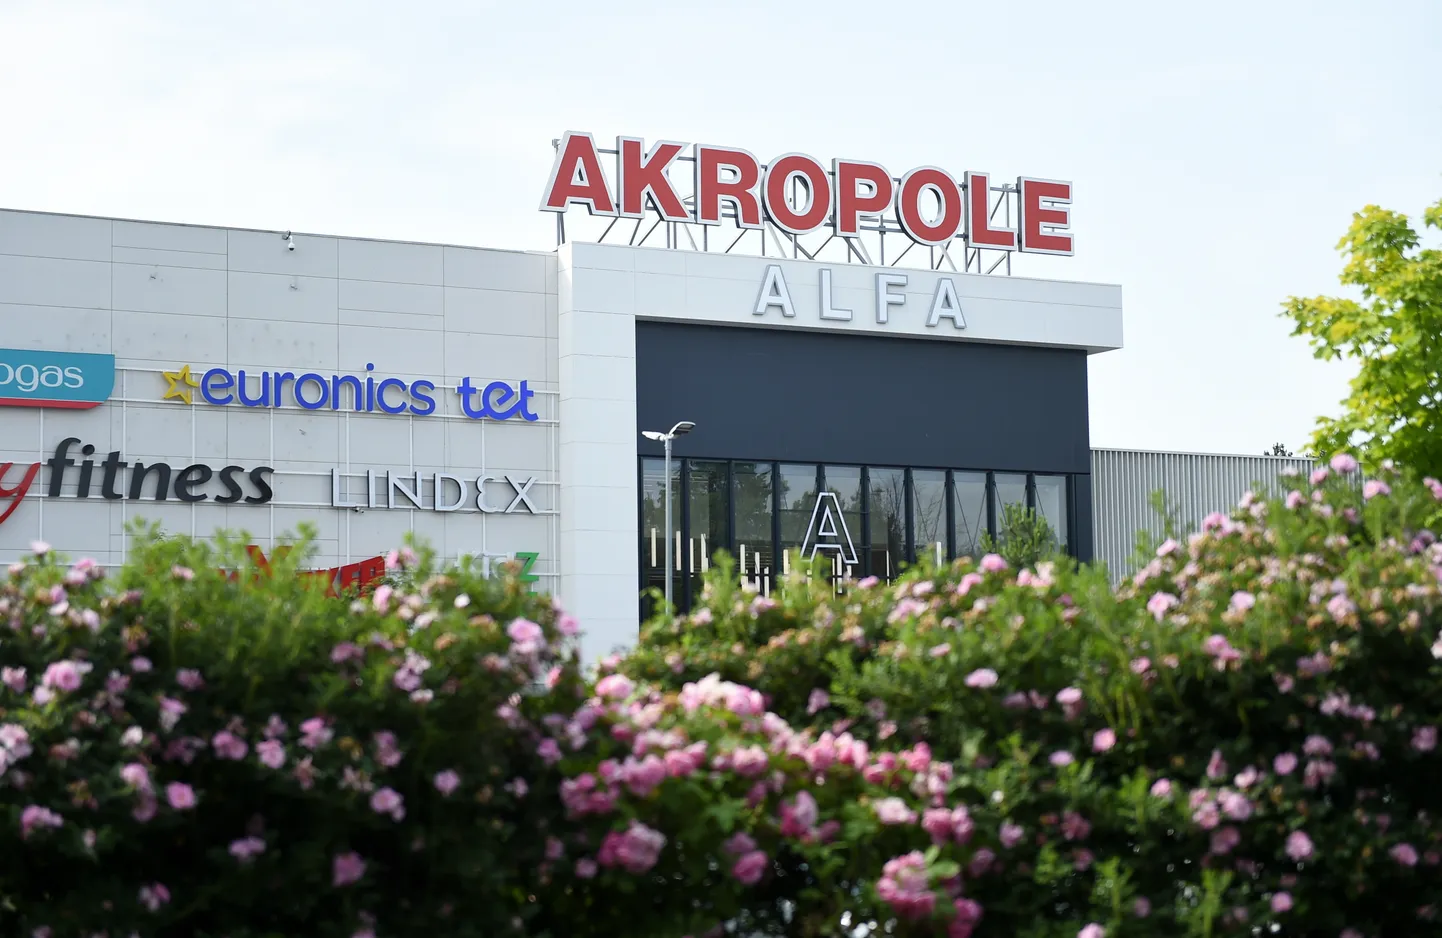 Iepirkšanās centrs "Akropole Alfa".